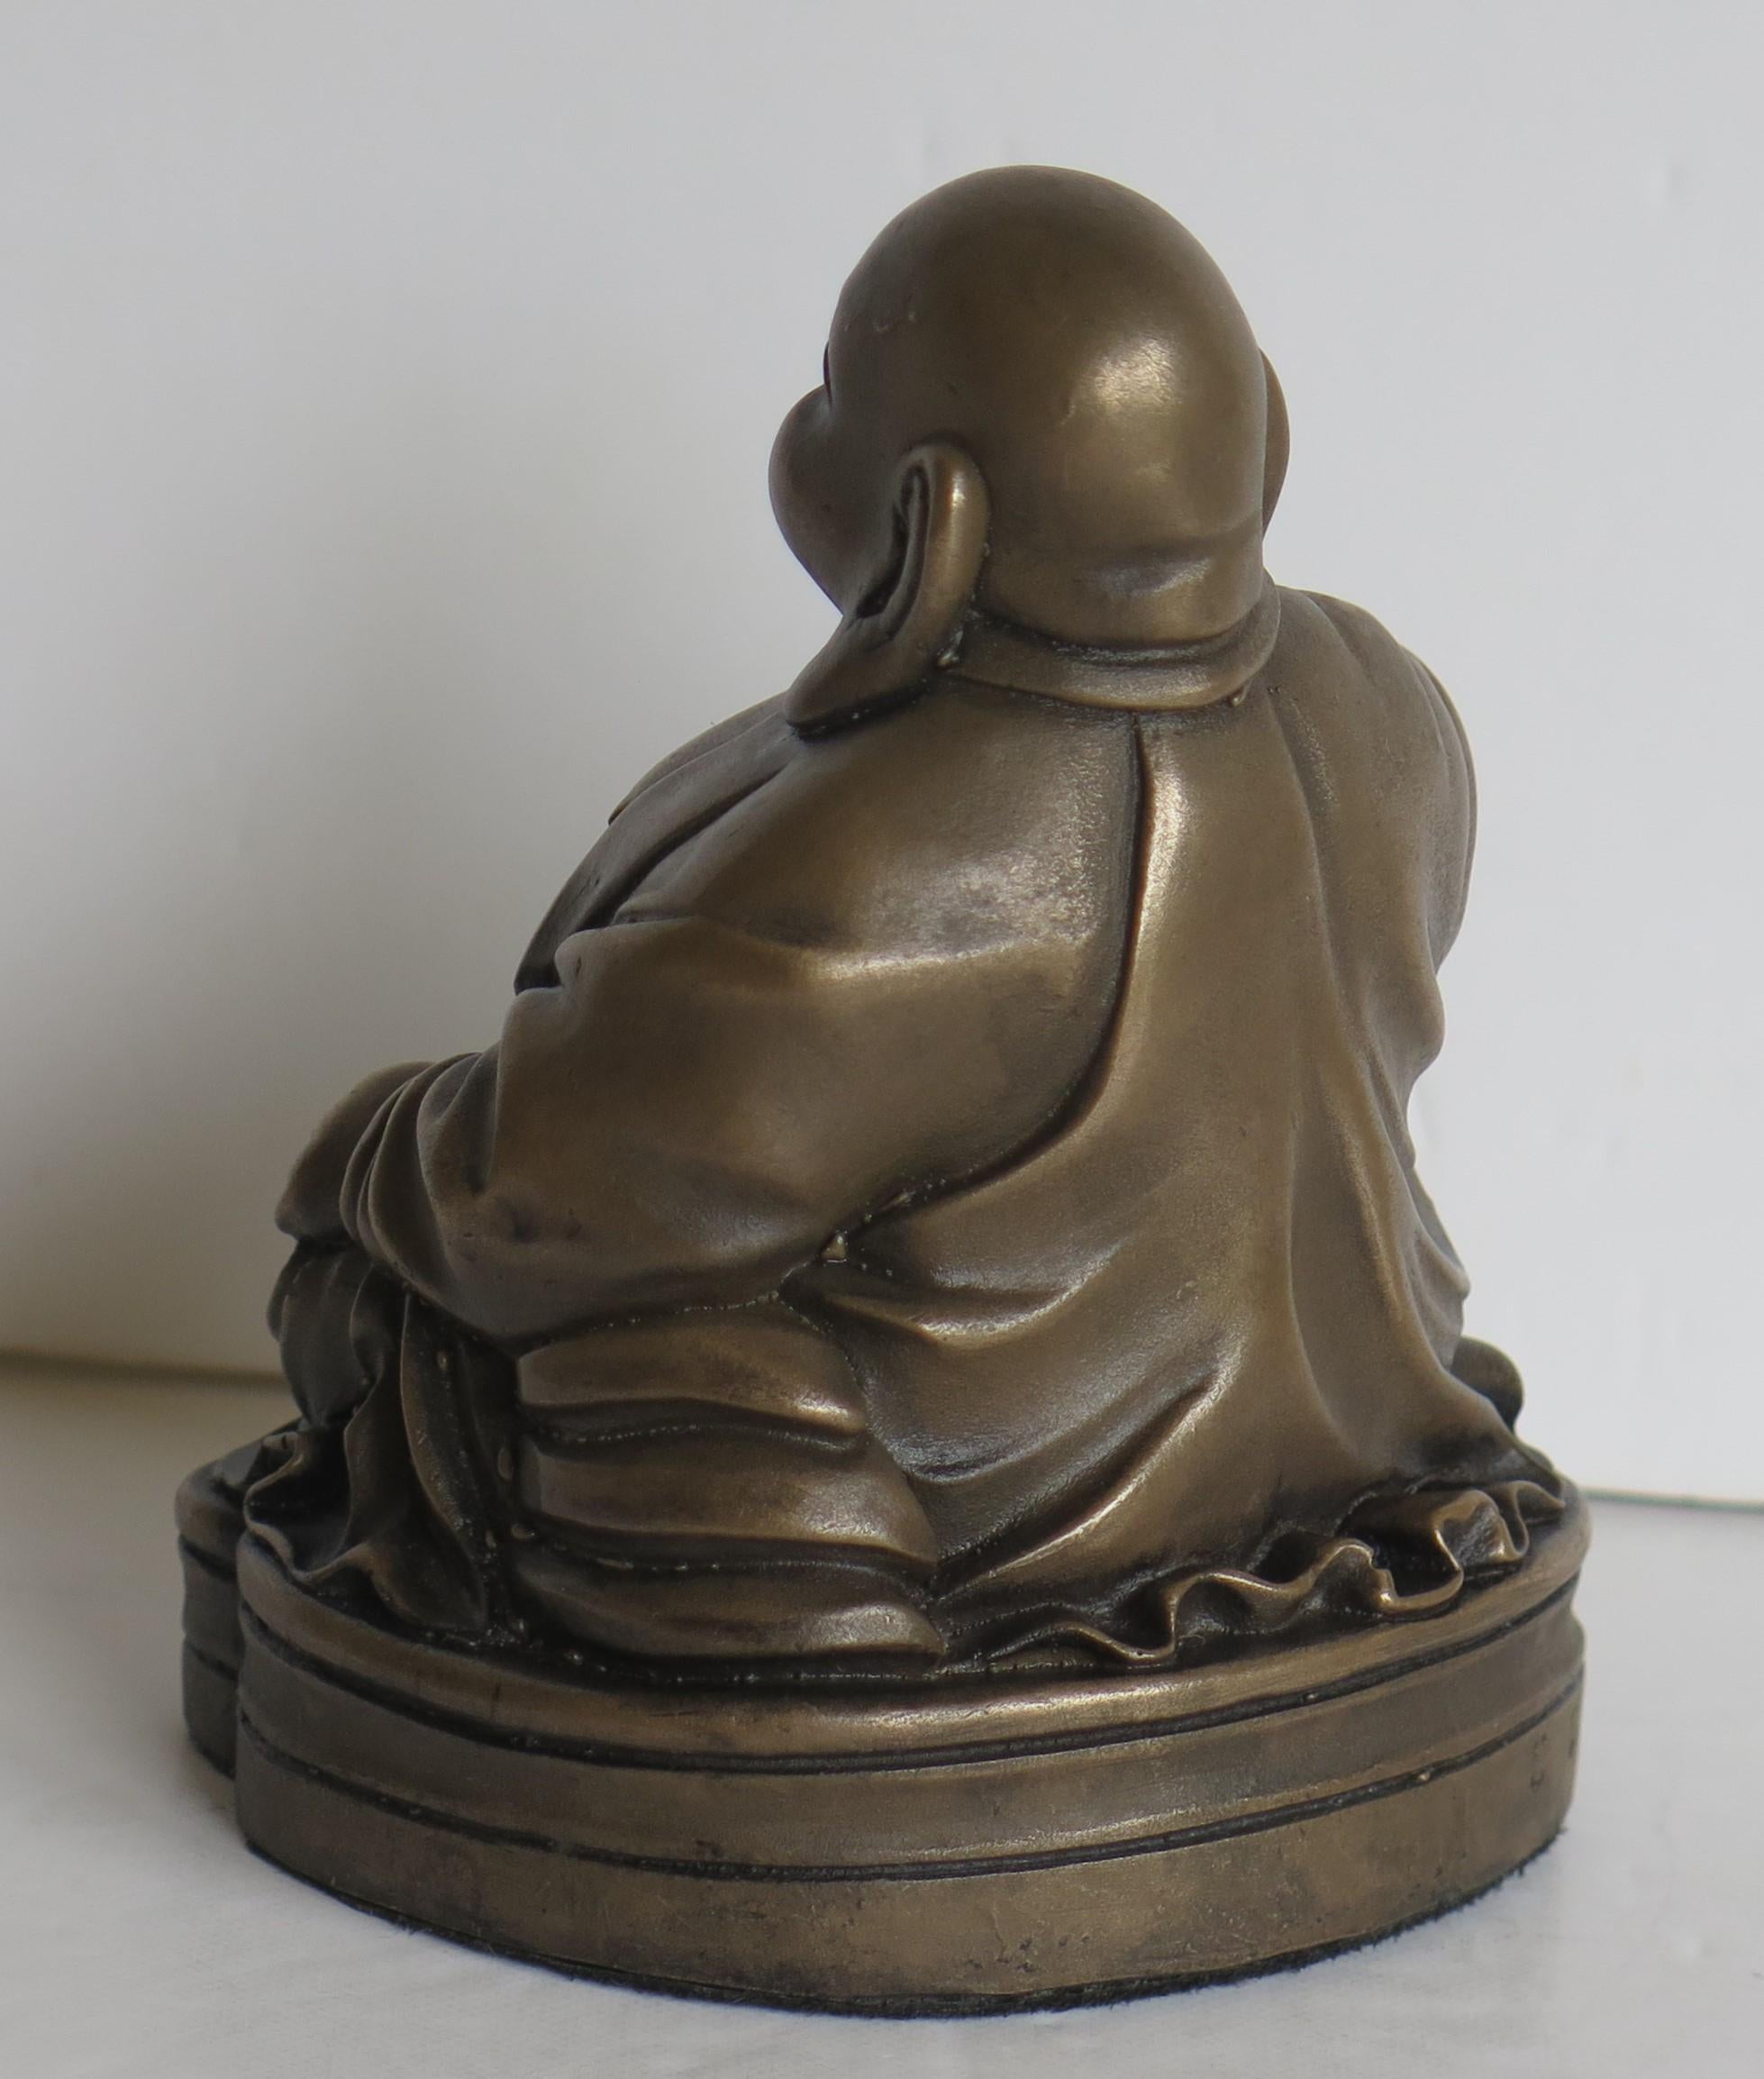 20th Century Bronze Seated Buddha Sculpture or Statue, Circa 1920s